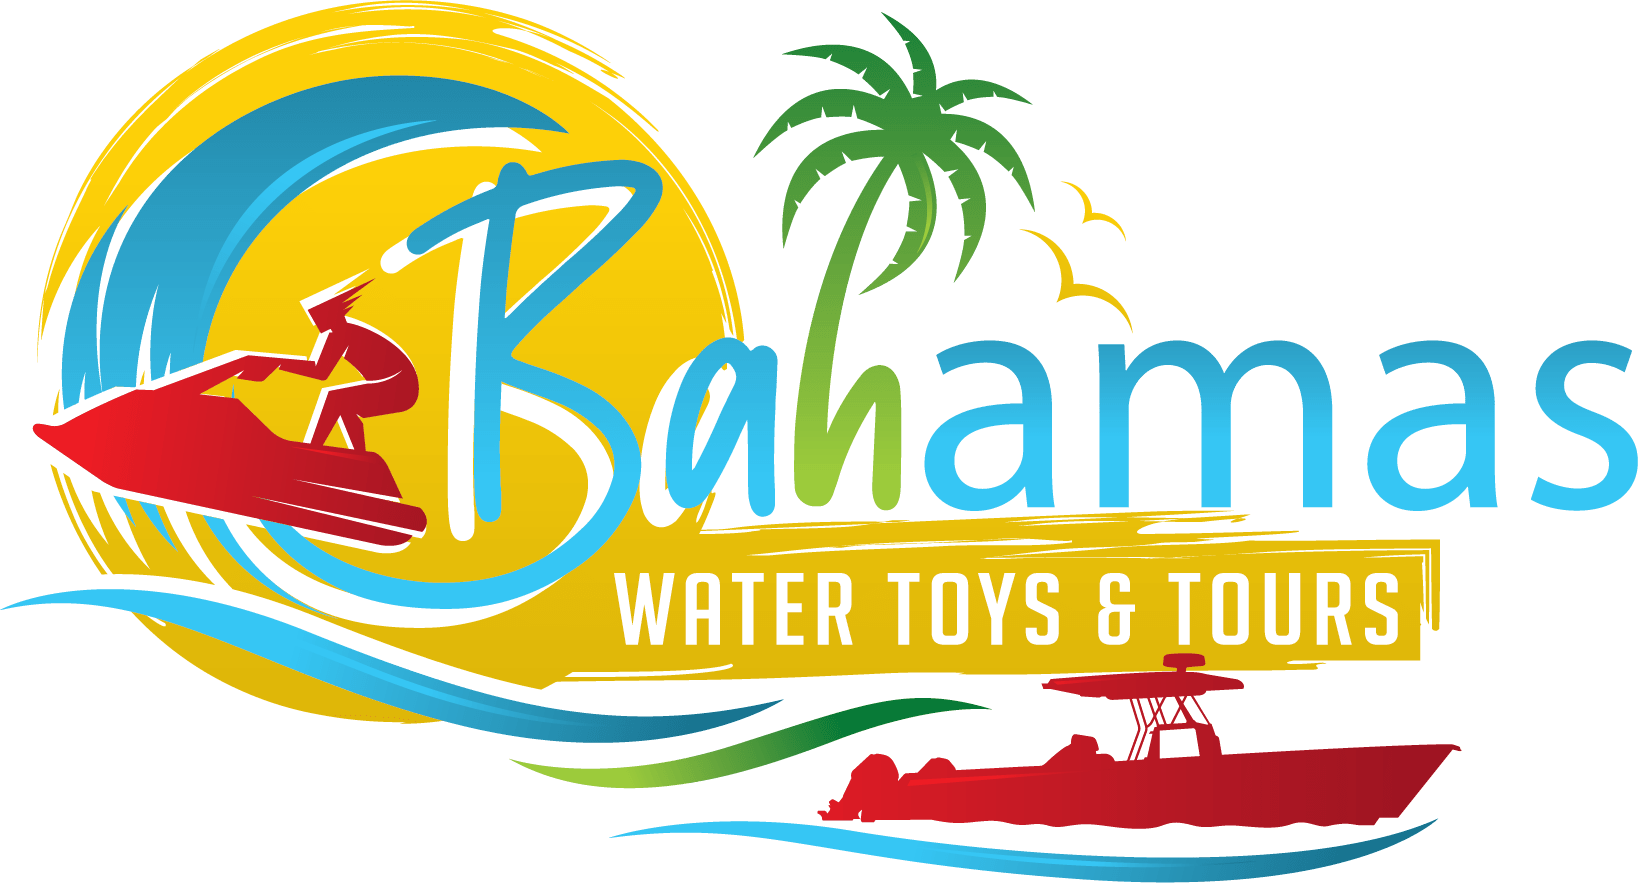 Bahamas Water Toys